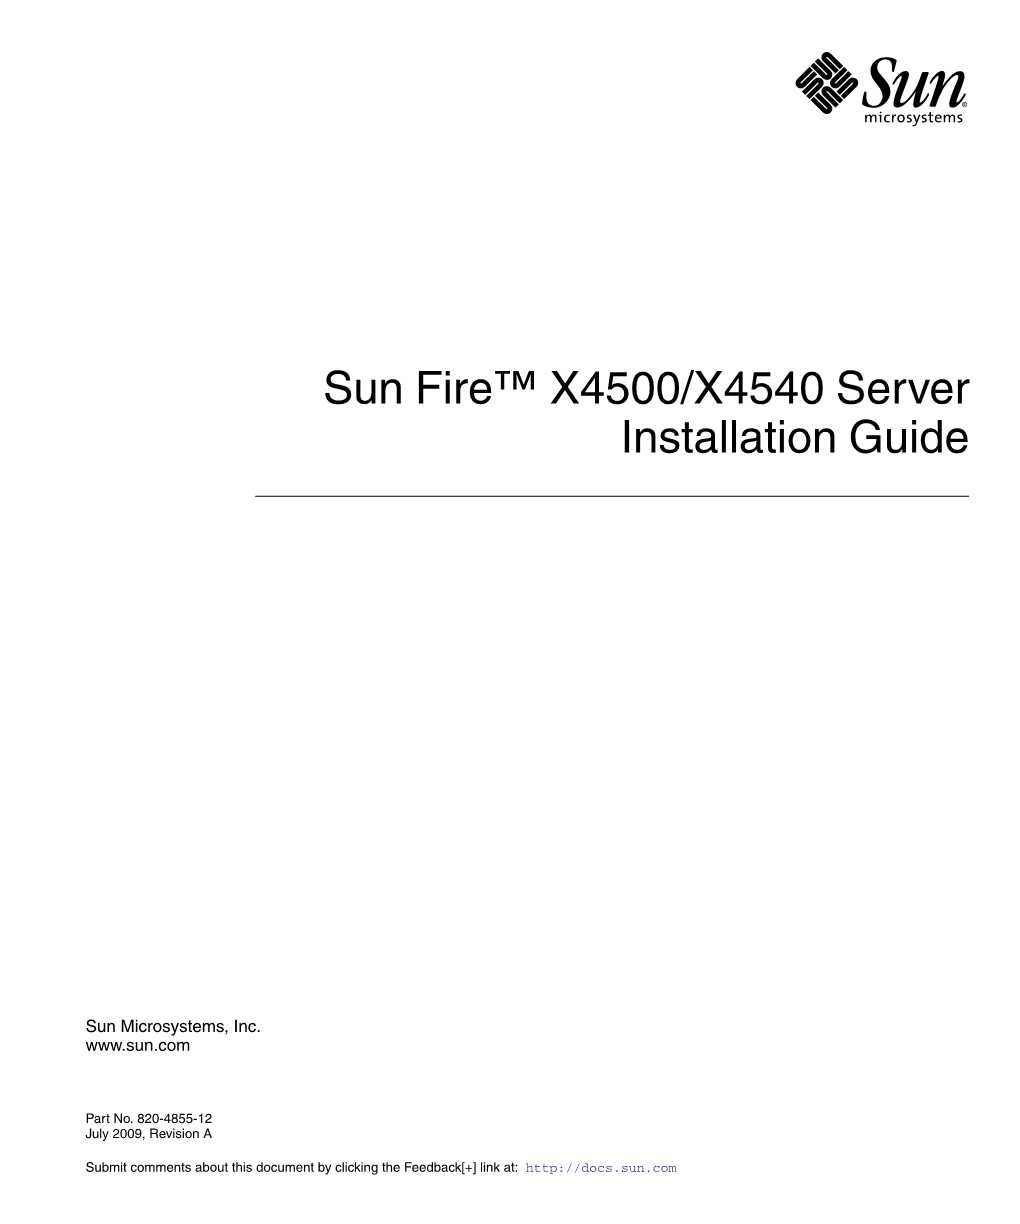 Sun Fire X4500/X4540 Server Installation